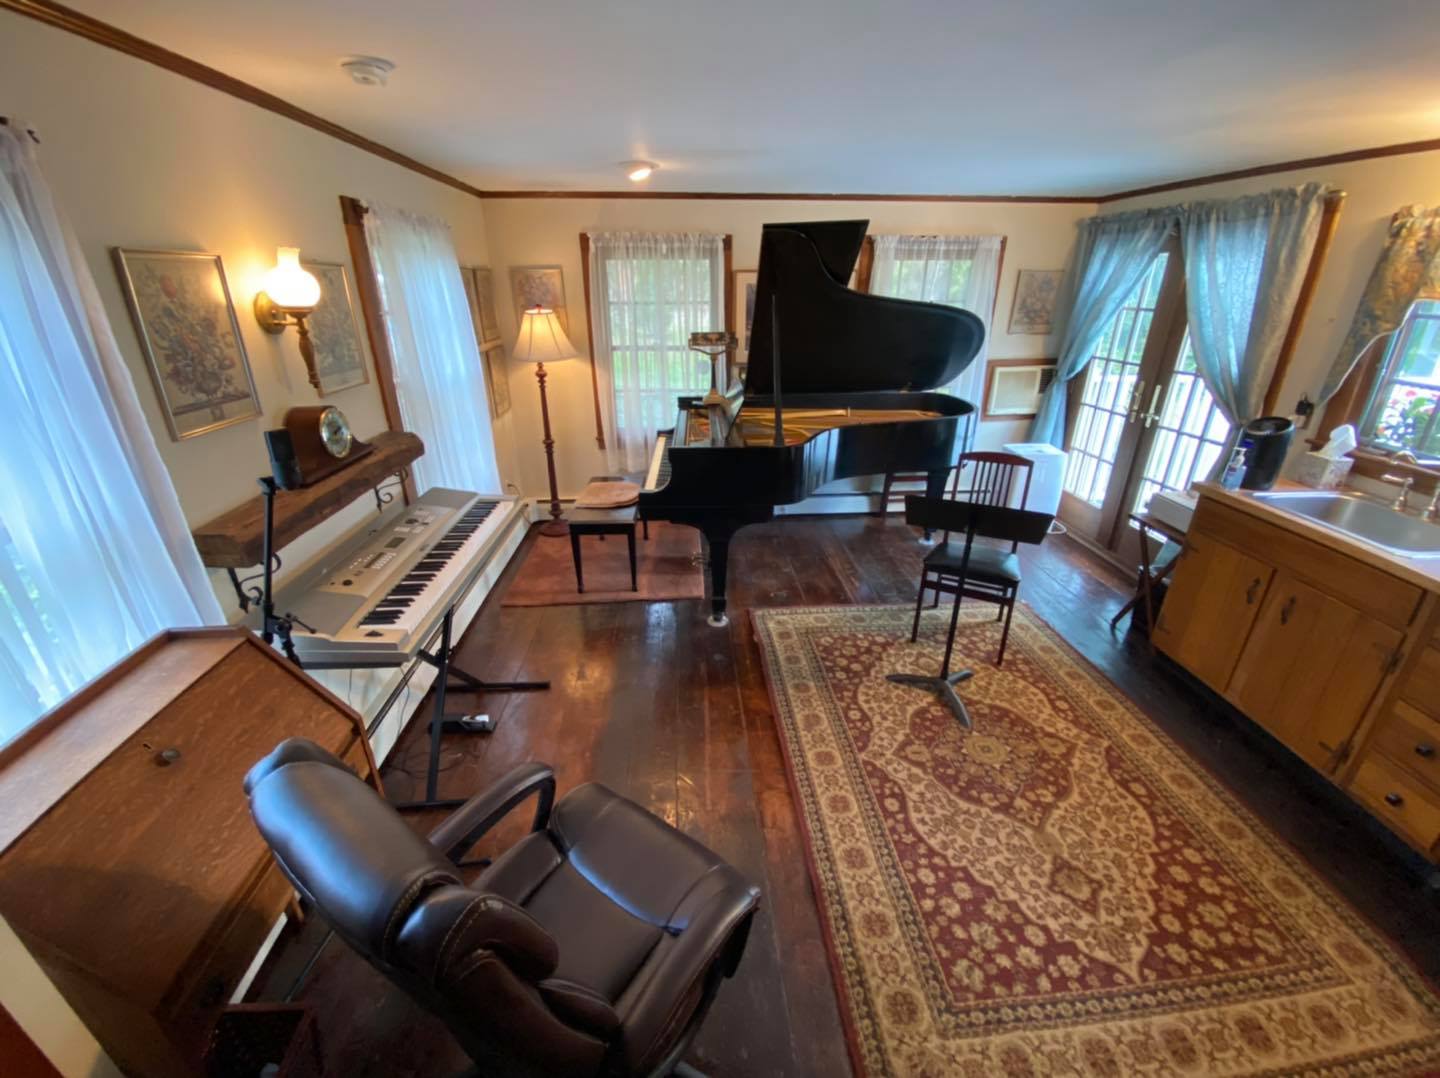 R. Franklin Donohue Music Studio